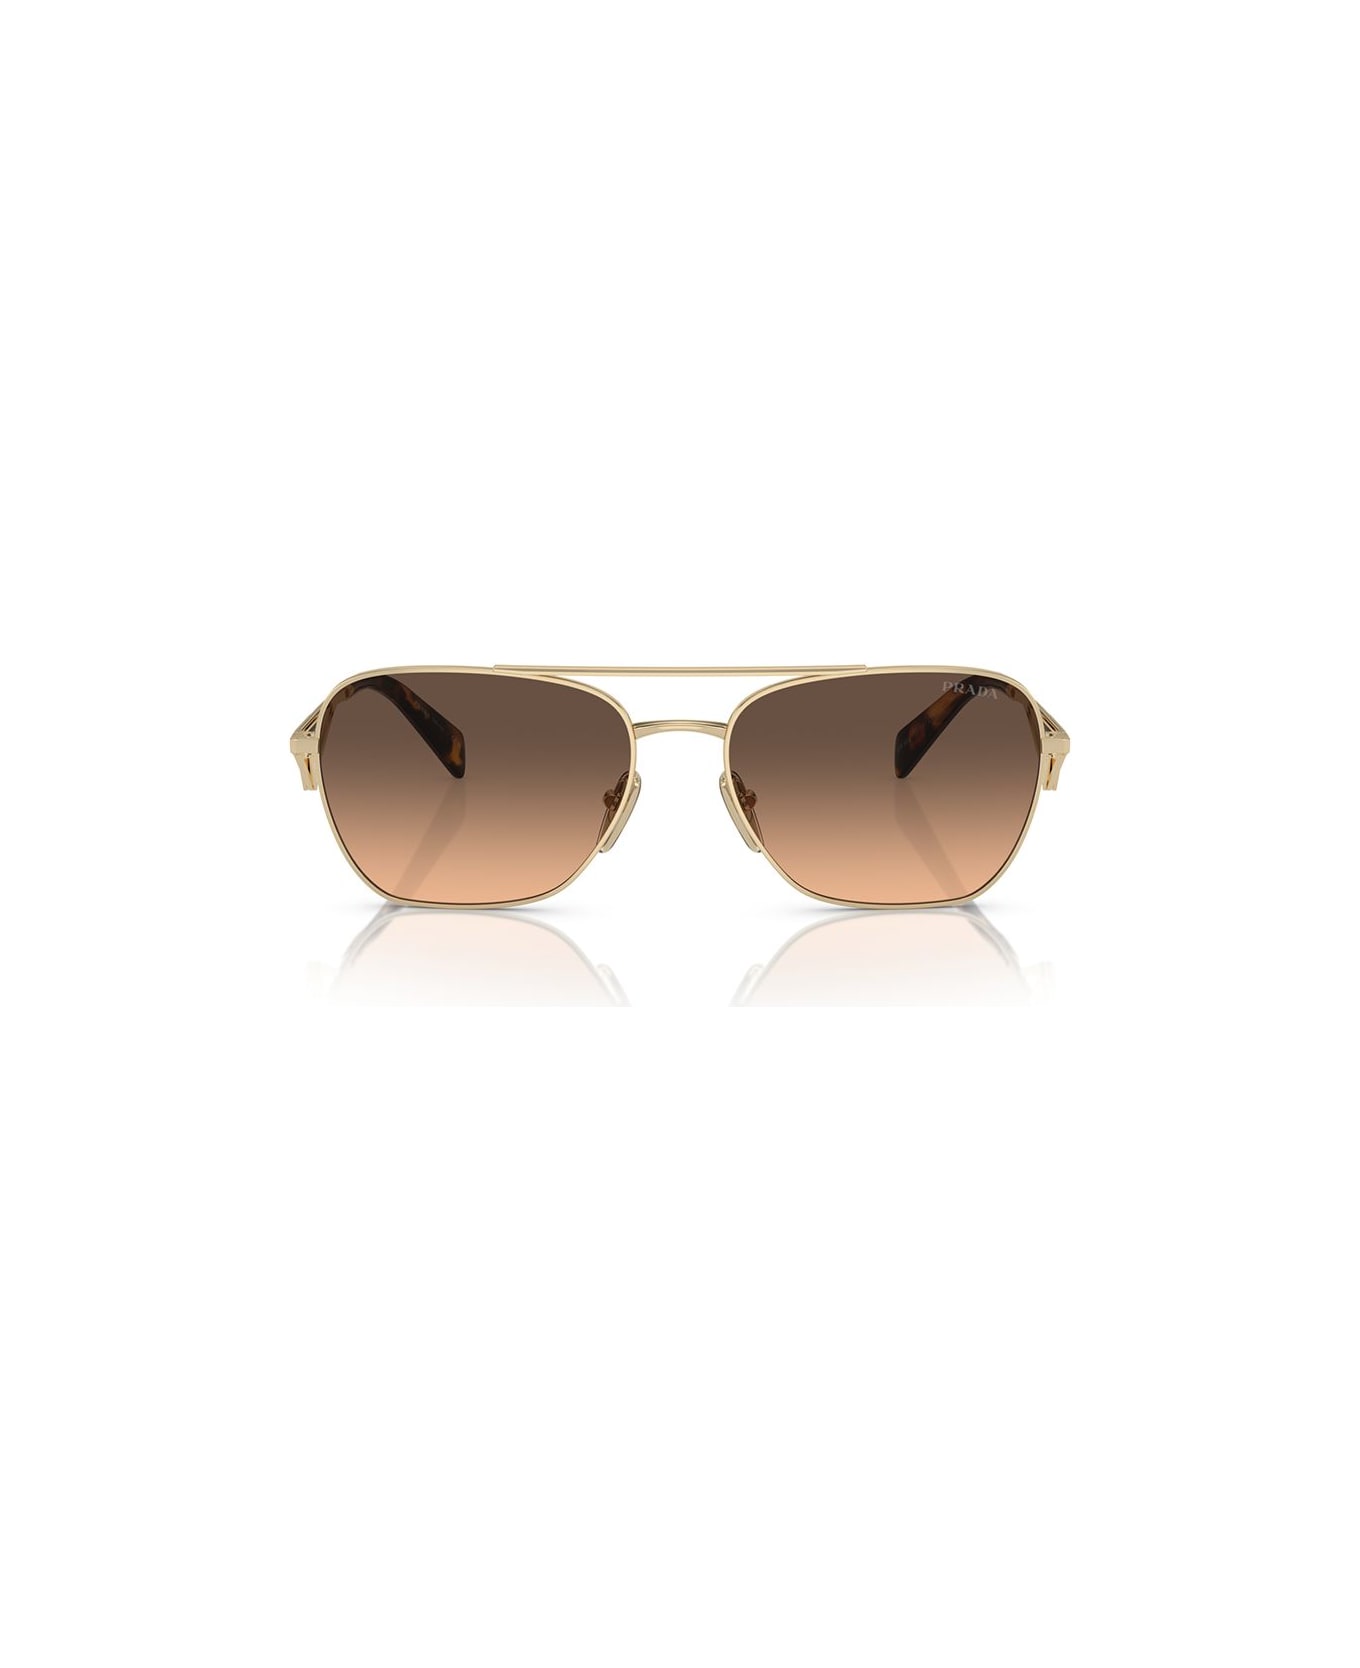 Prada Eyewear Sunglasses - ZVN50C サングラス